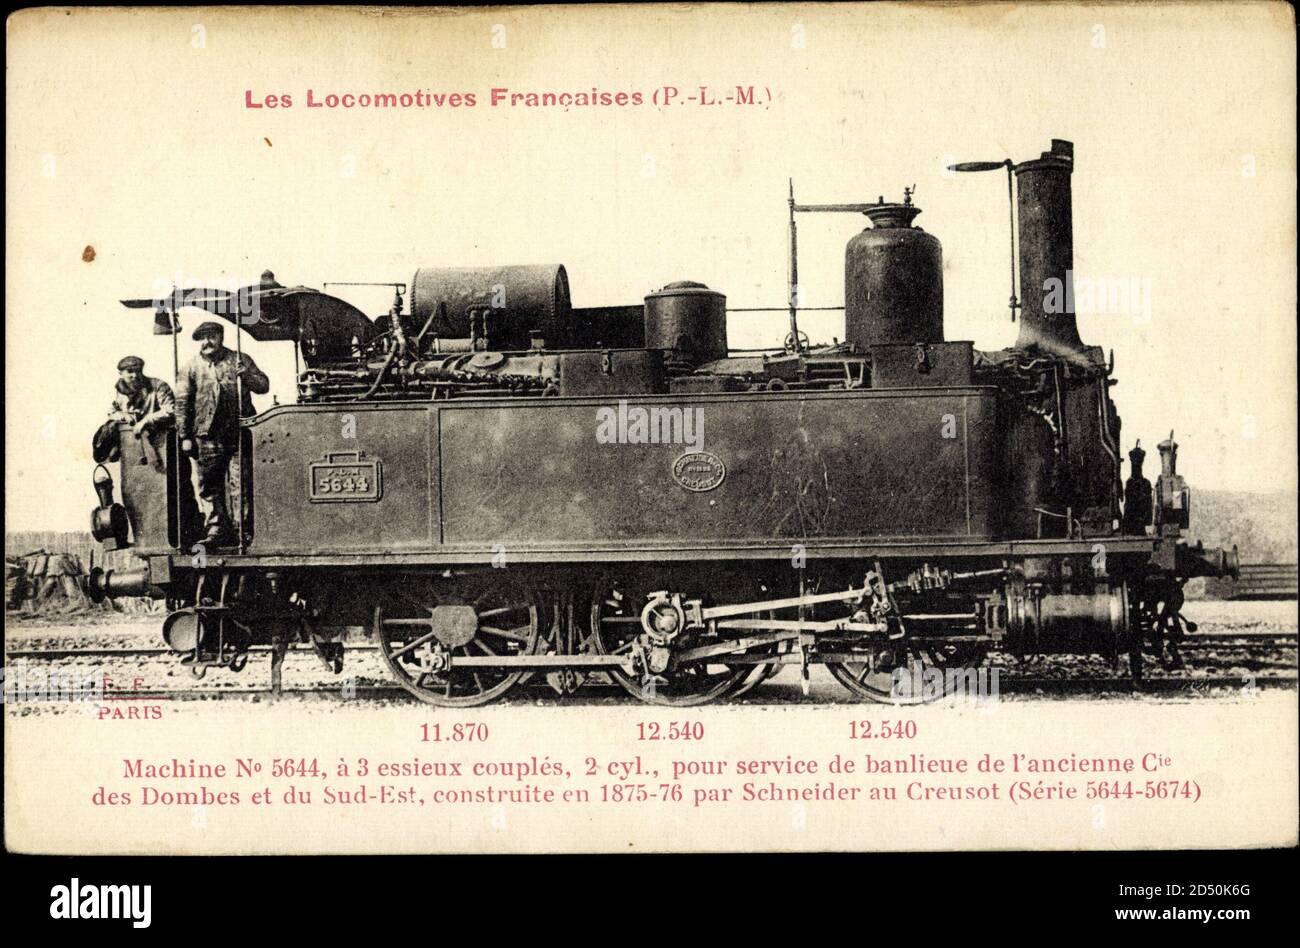 Locomotives Francaises, P.L.M, Machine No 5644 | usage worldwide Stock Photo